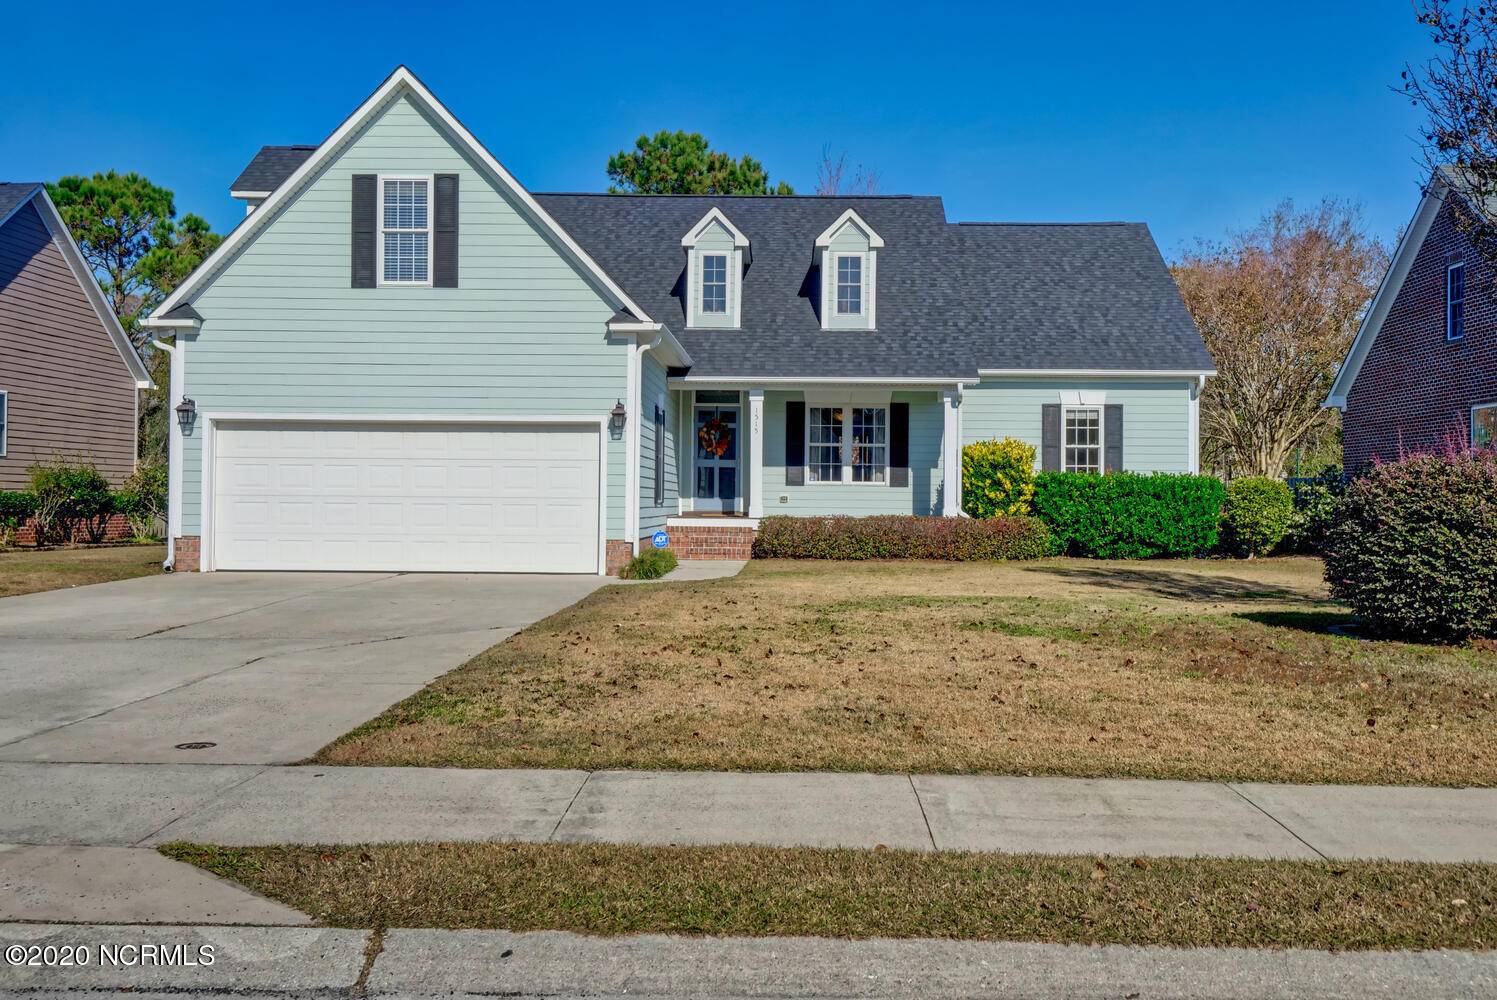 Homes for sale - 1515 Sapphire Ridge Road, Wilmington, NC 28409